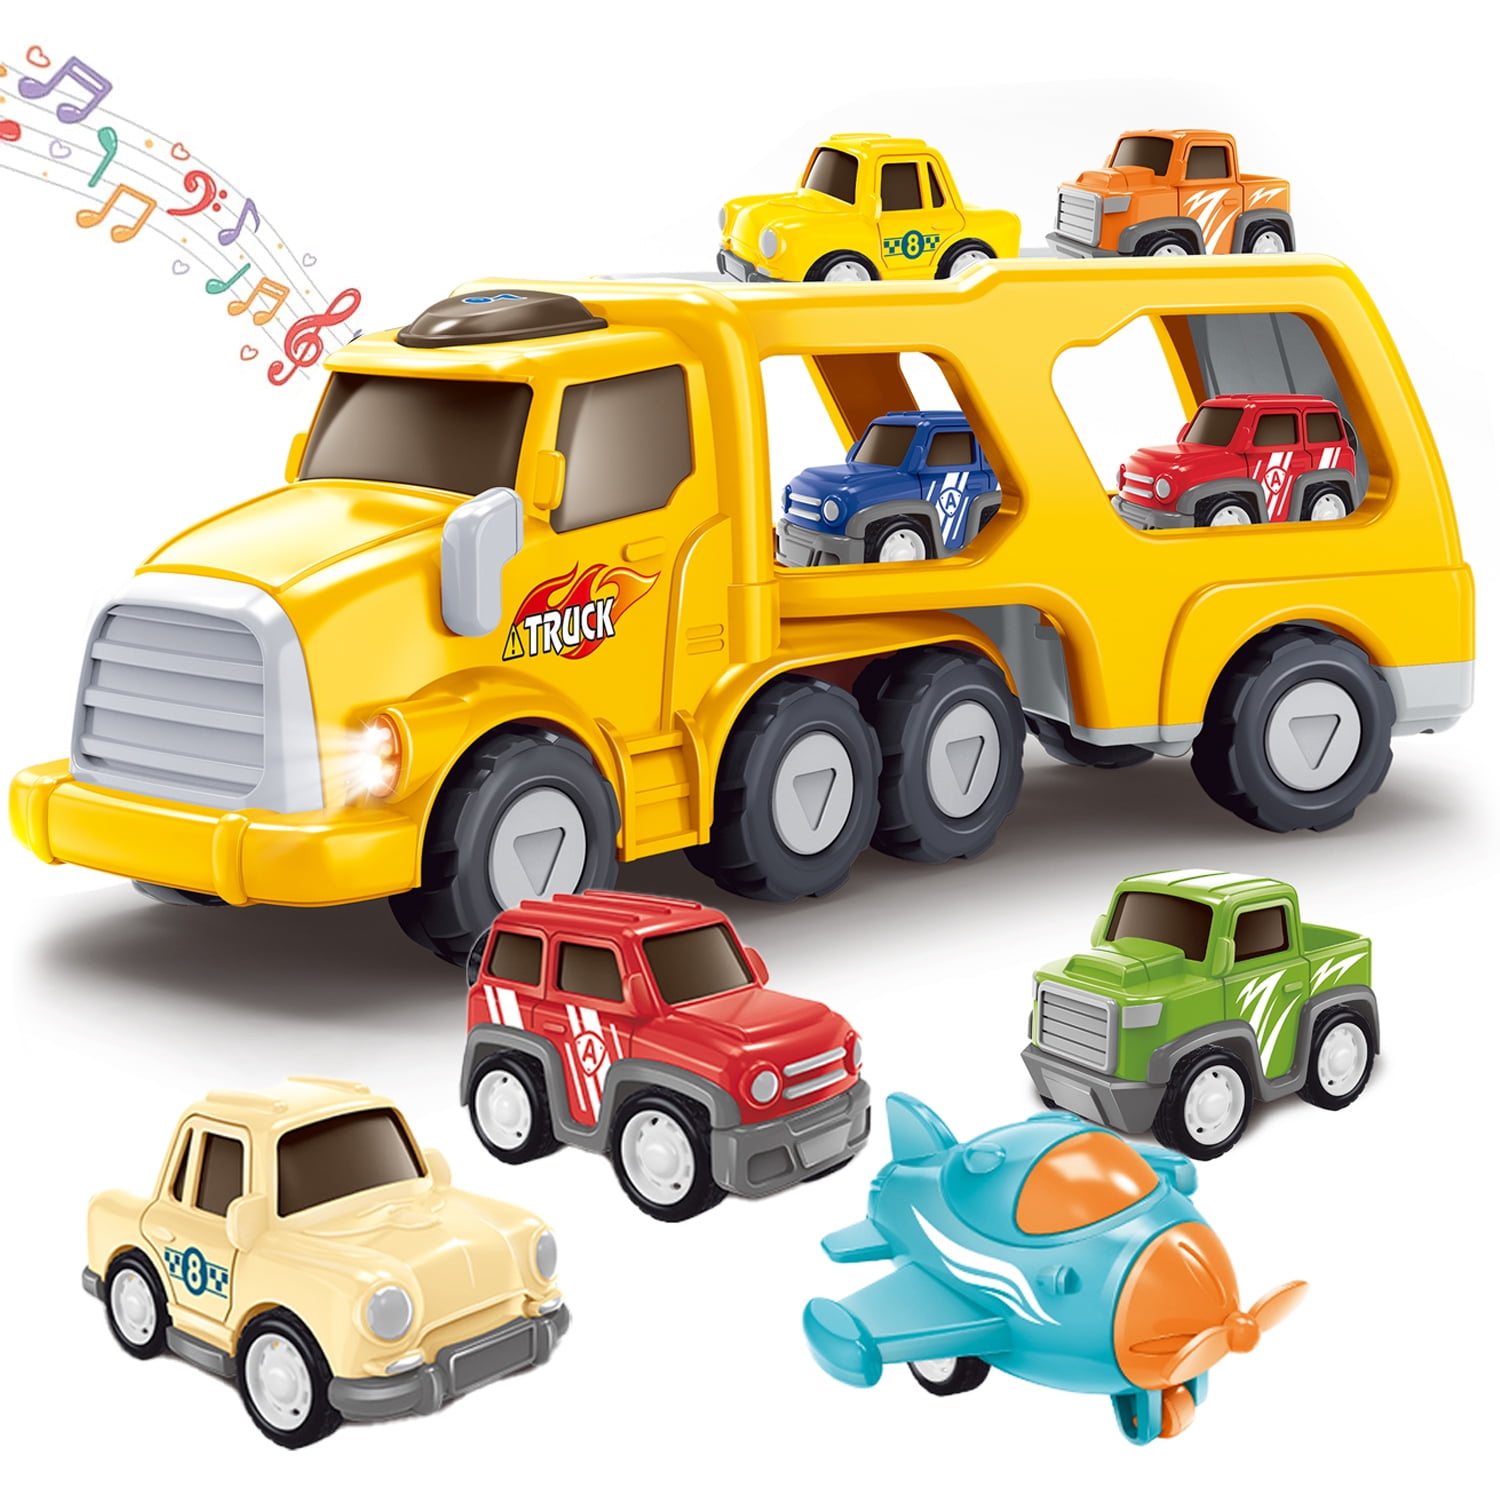 Baztoy assembly toy car construction vehicles set kids toy boy girl truck toy 